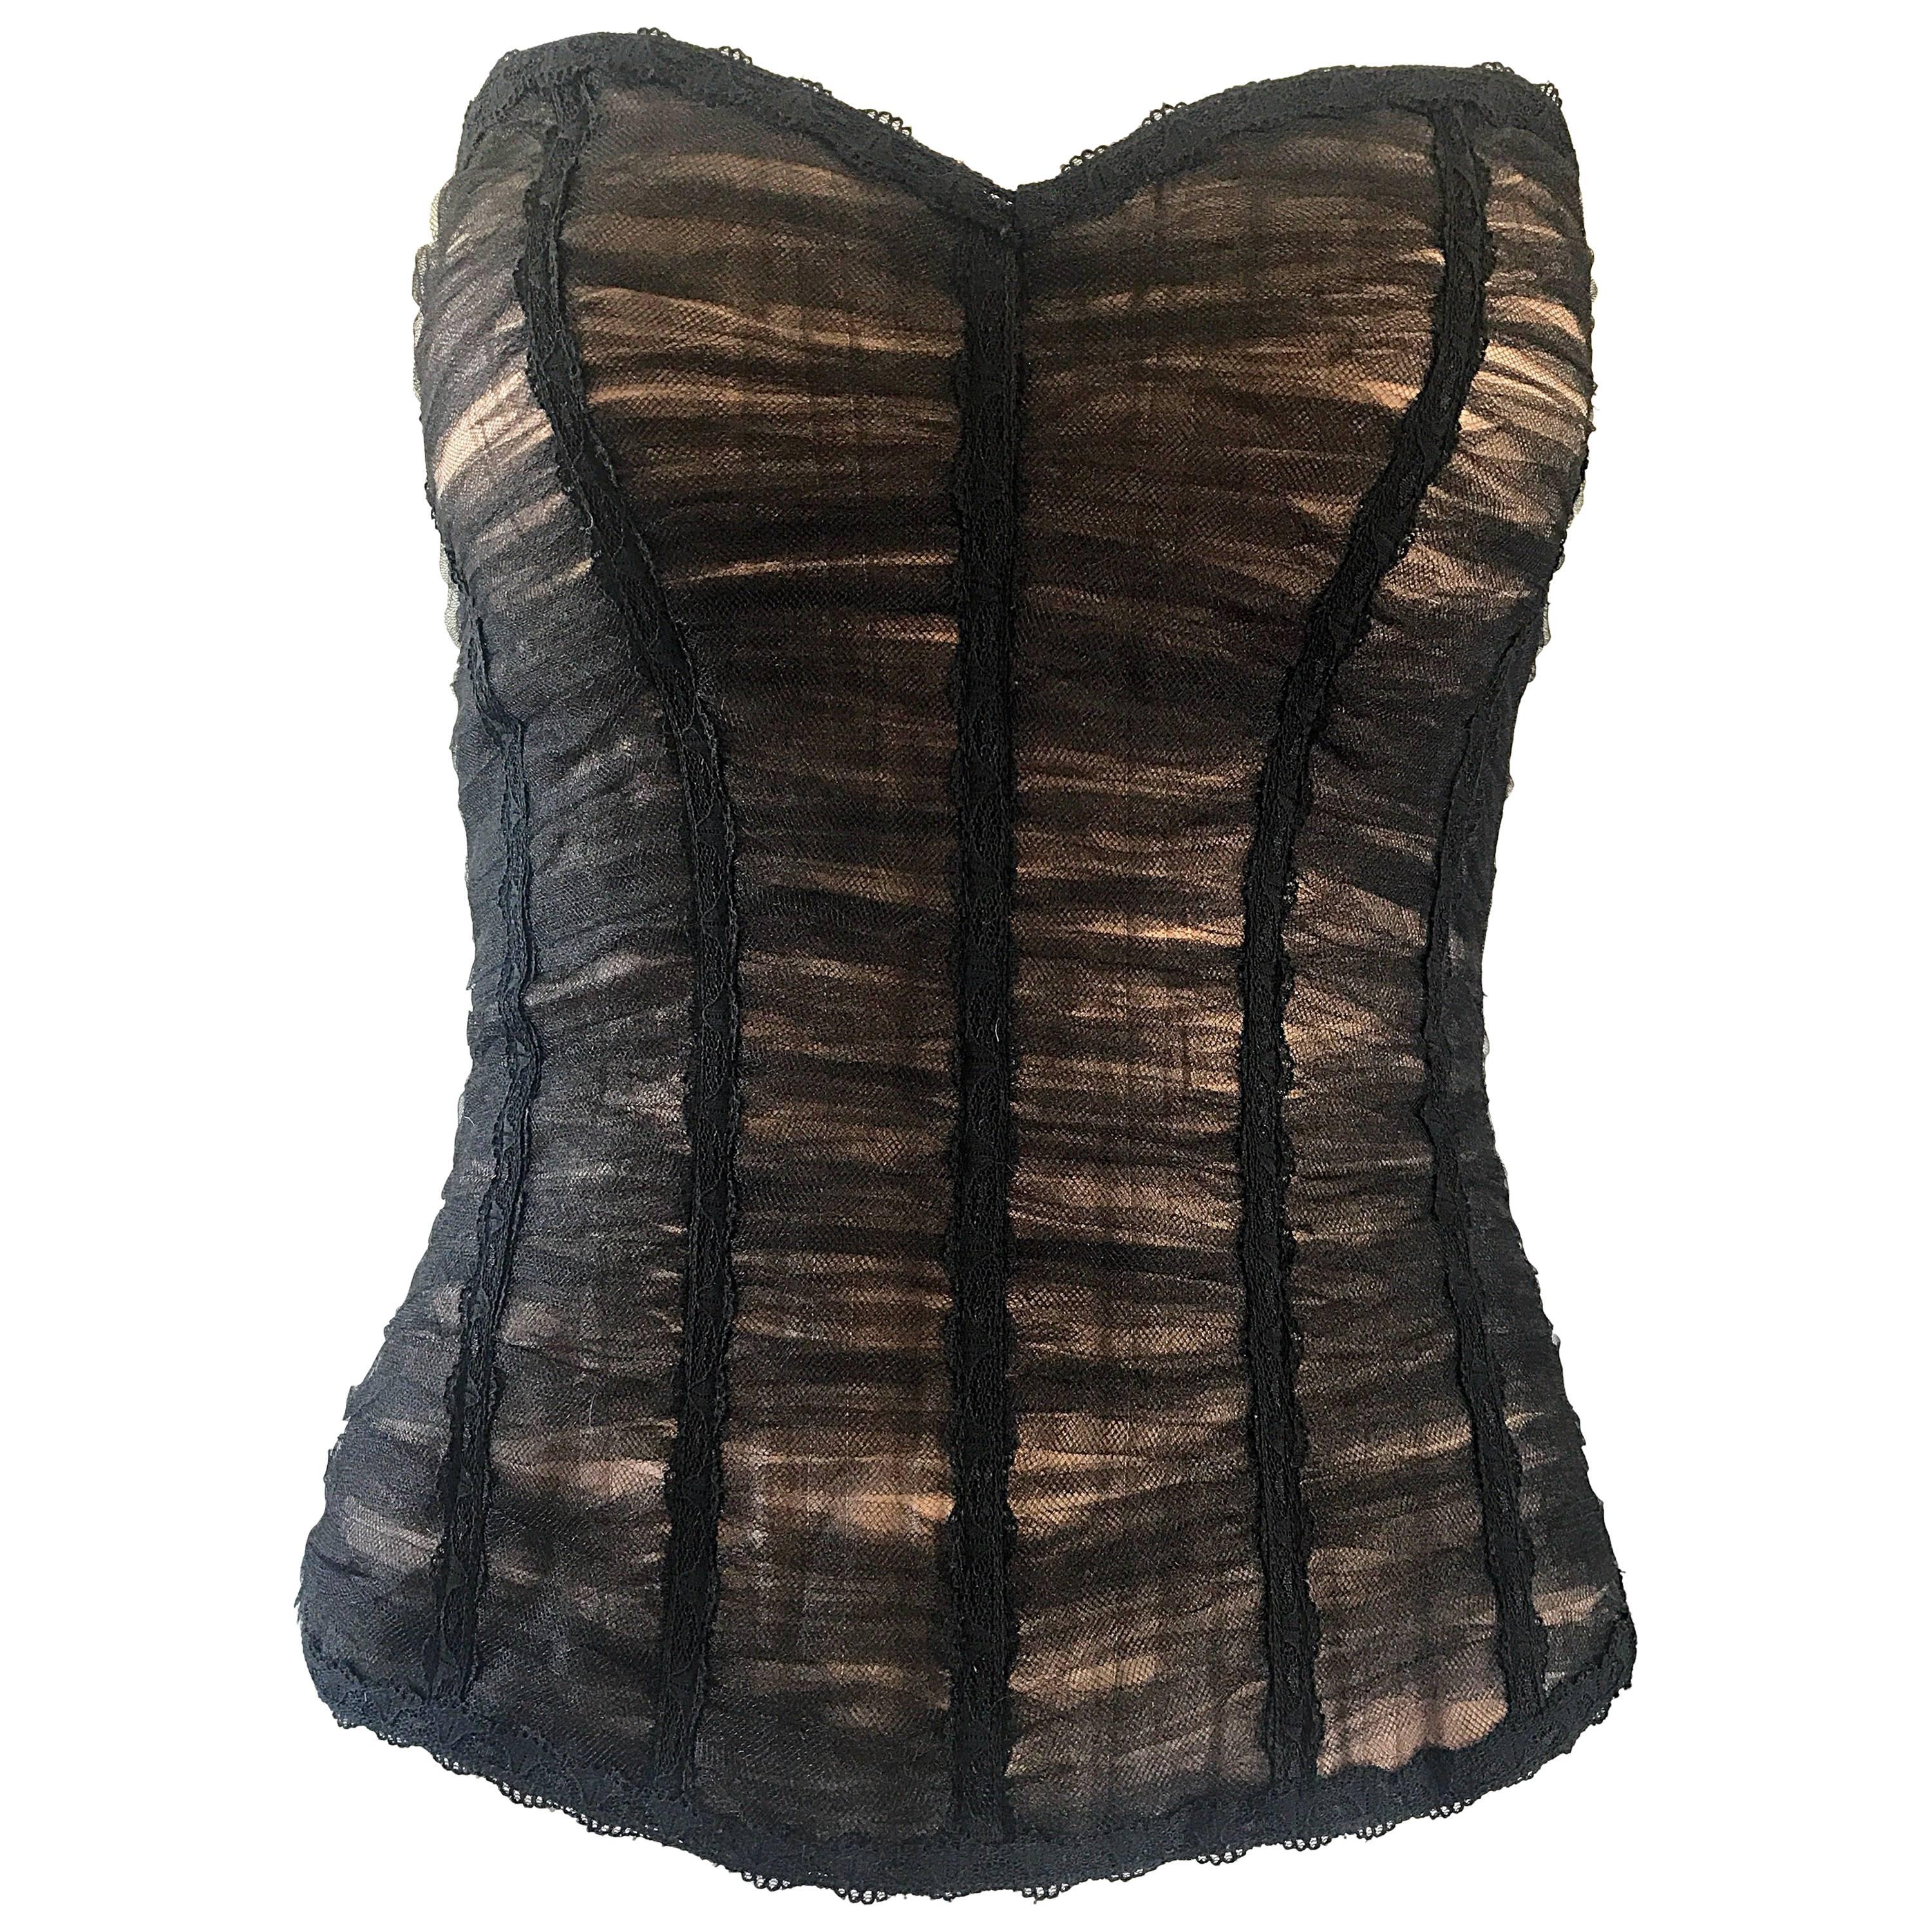 Rene Ruiz Couture Black and Nude Strapless Silk Net Overlay Bustier Corset Top